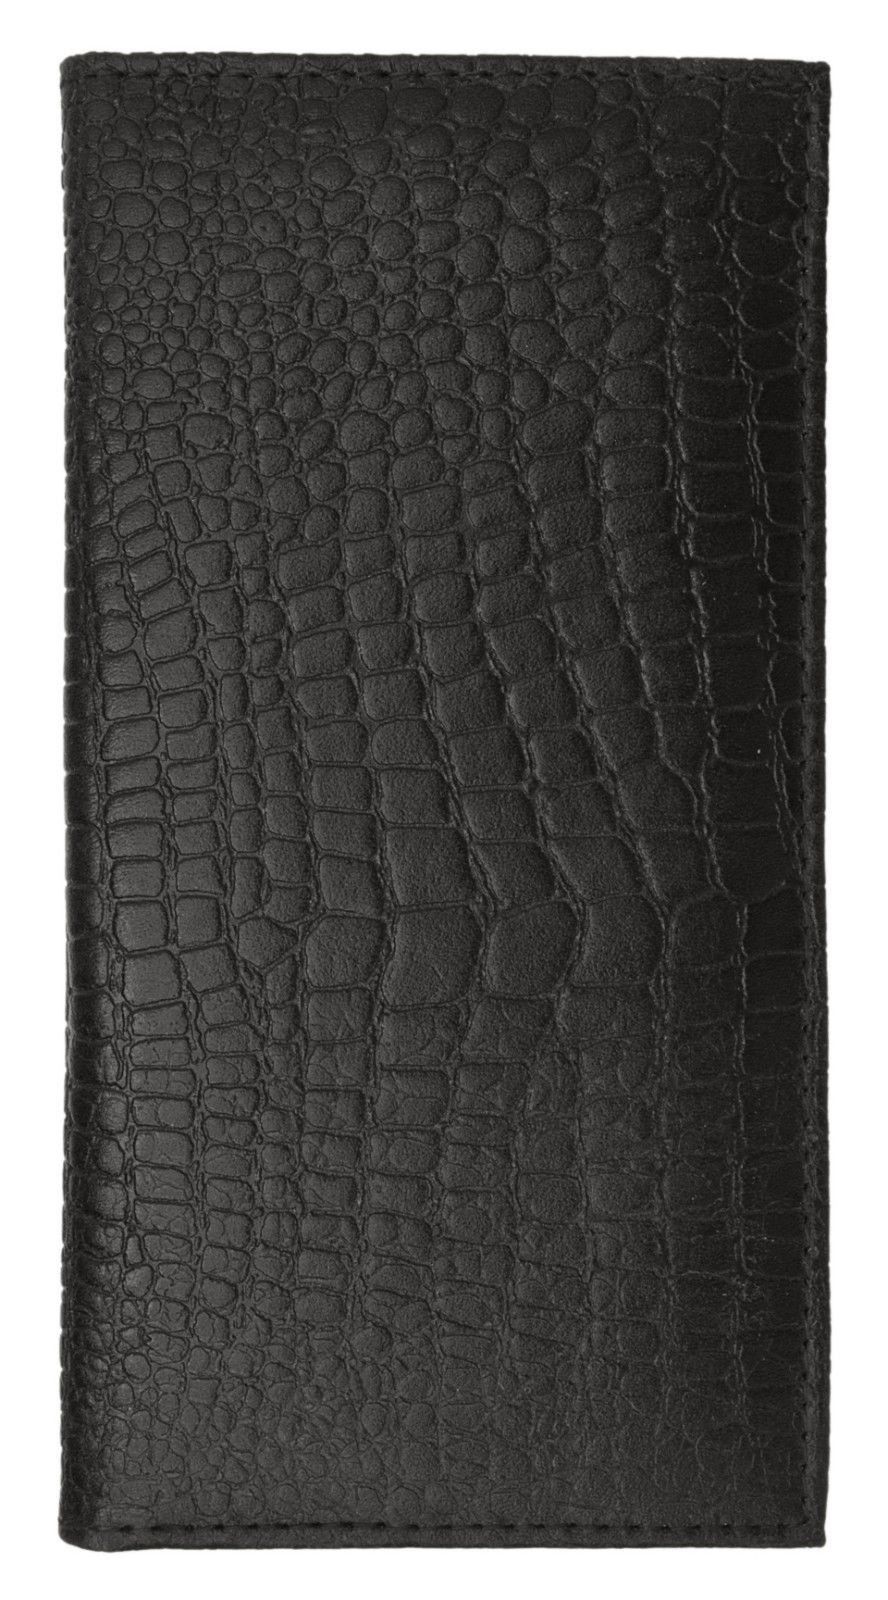 Genuine Leather Standard Croc Print Checkbook Cover Long Croc Print Wallet Western Cowboy Style Crocodile